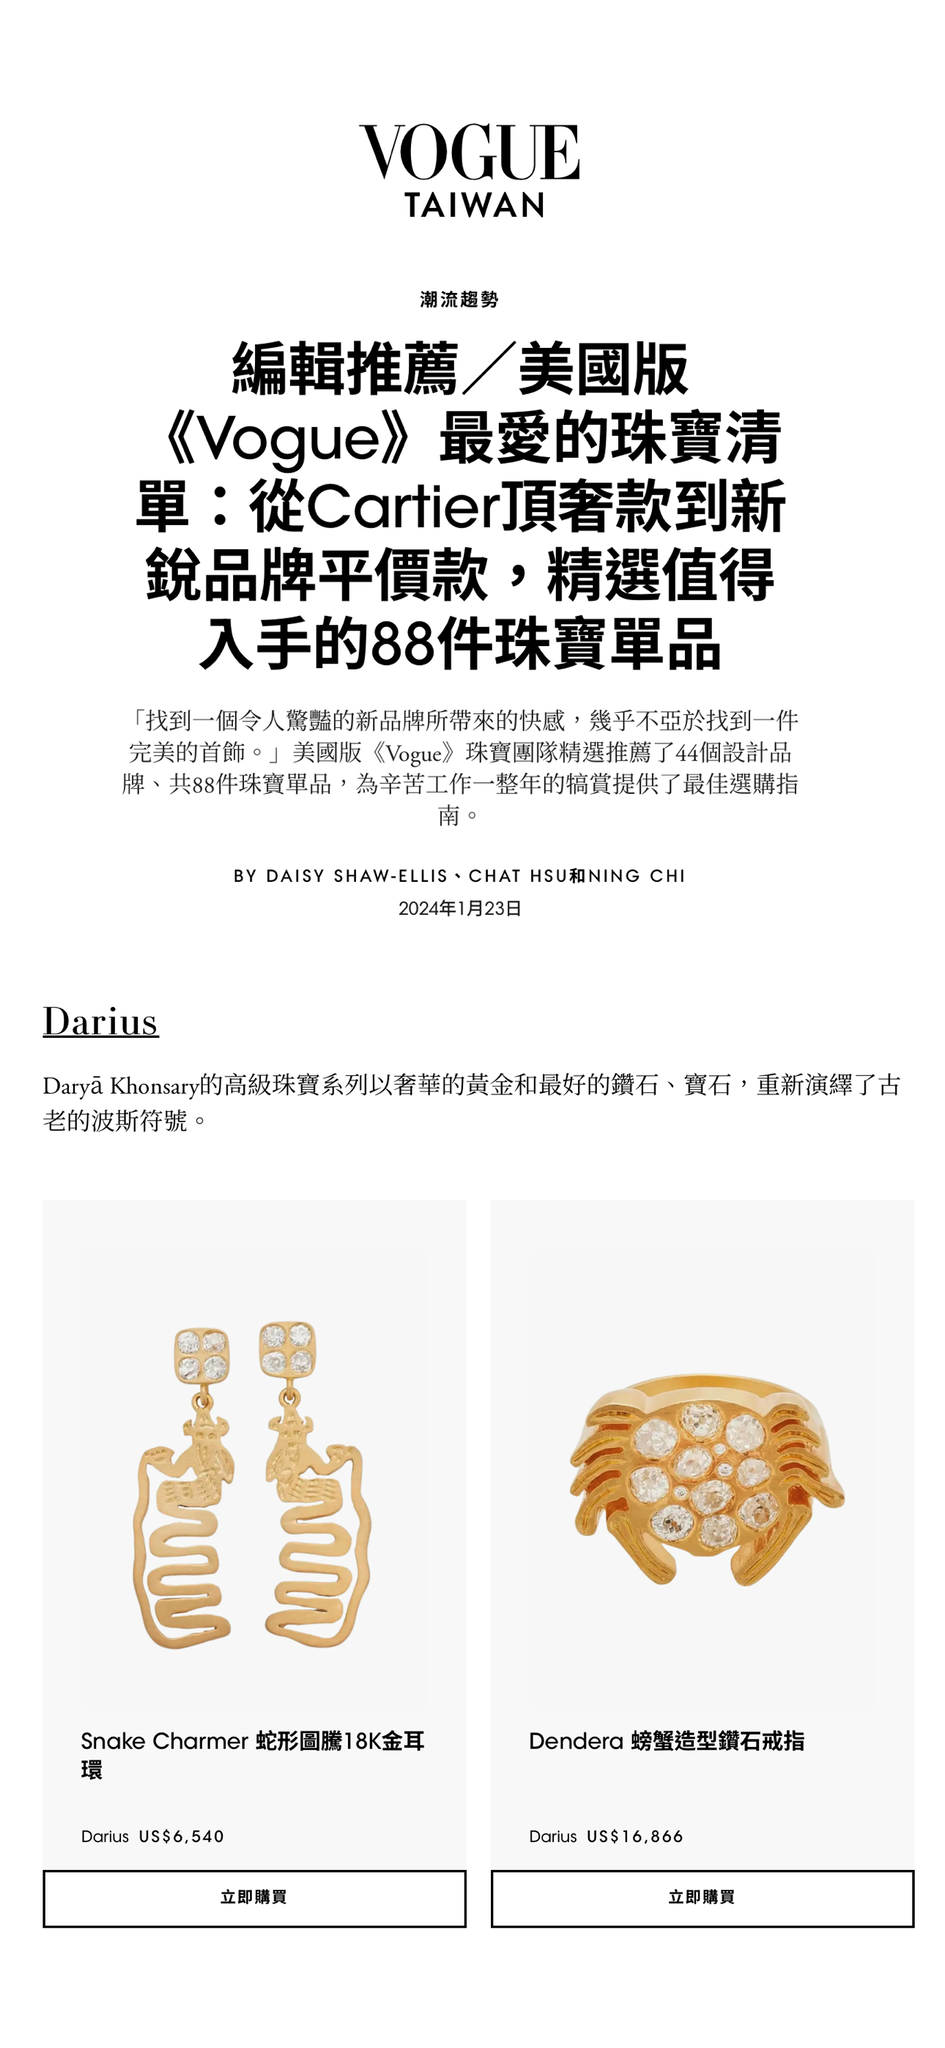 Darius Jewels Darya Khonsary vogue daisy shaw ellis vogue Taiwan